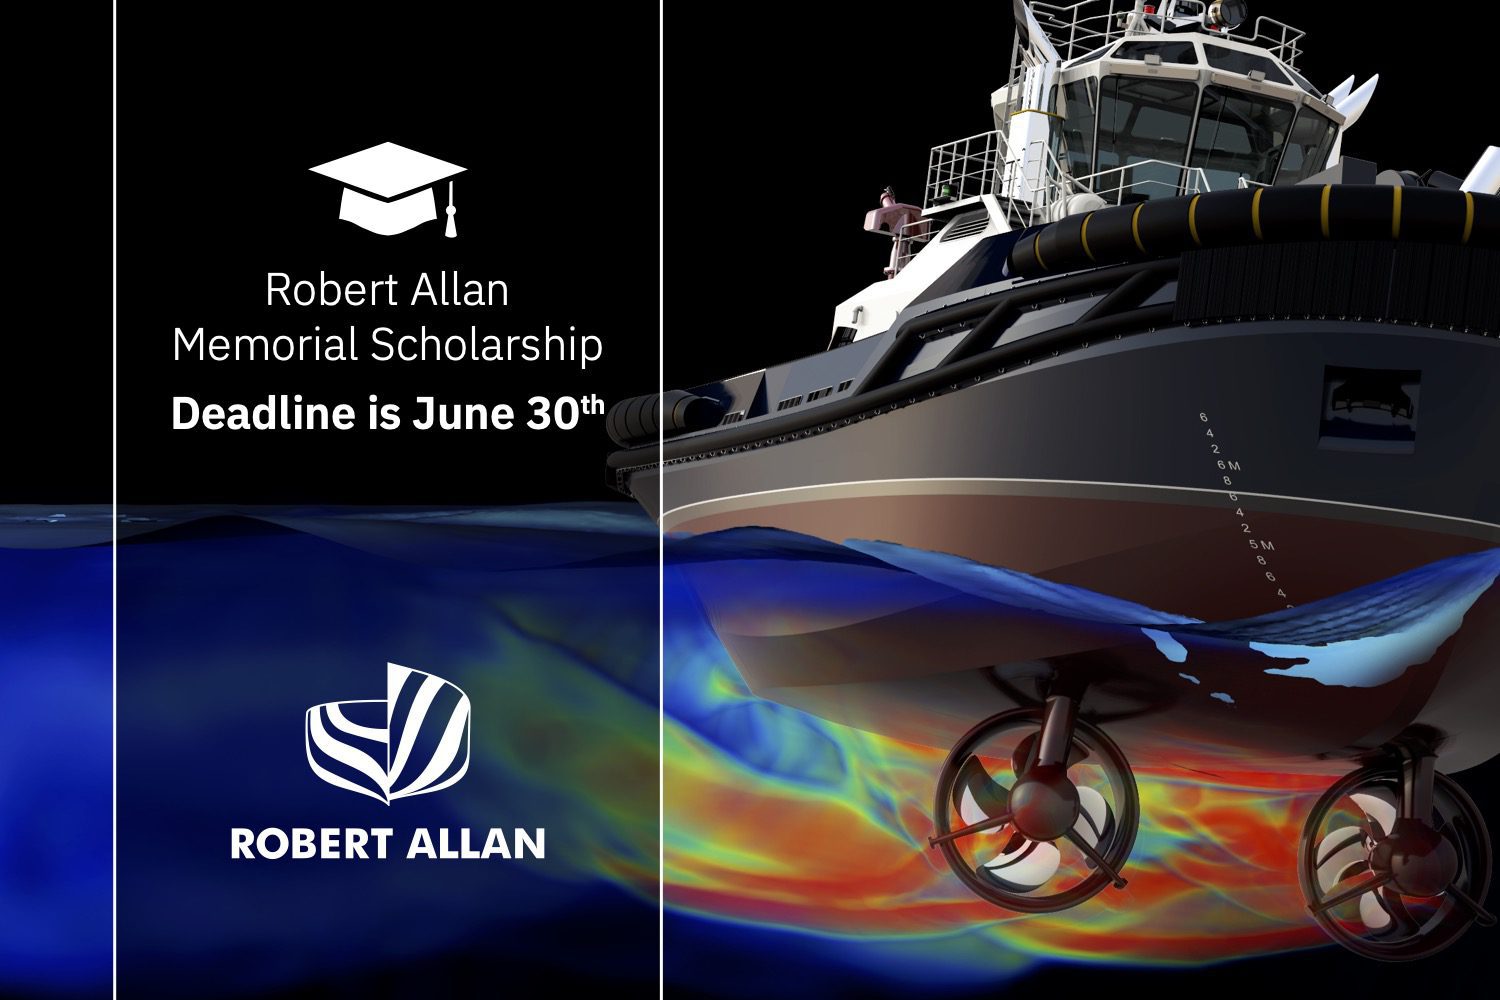 Robert Allan Memorial Scholarship 2021